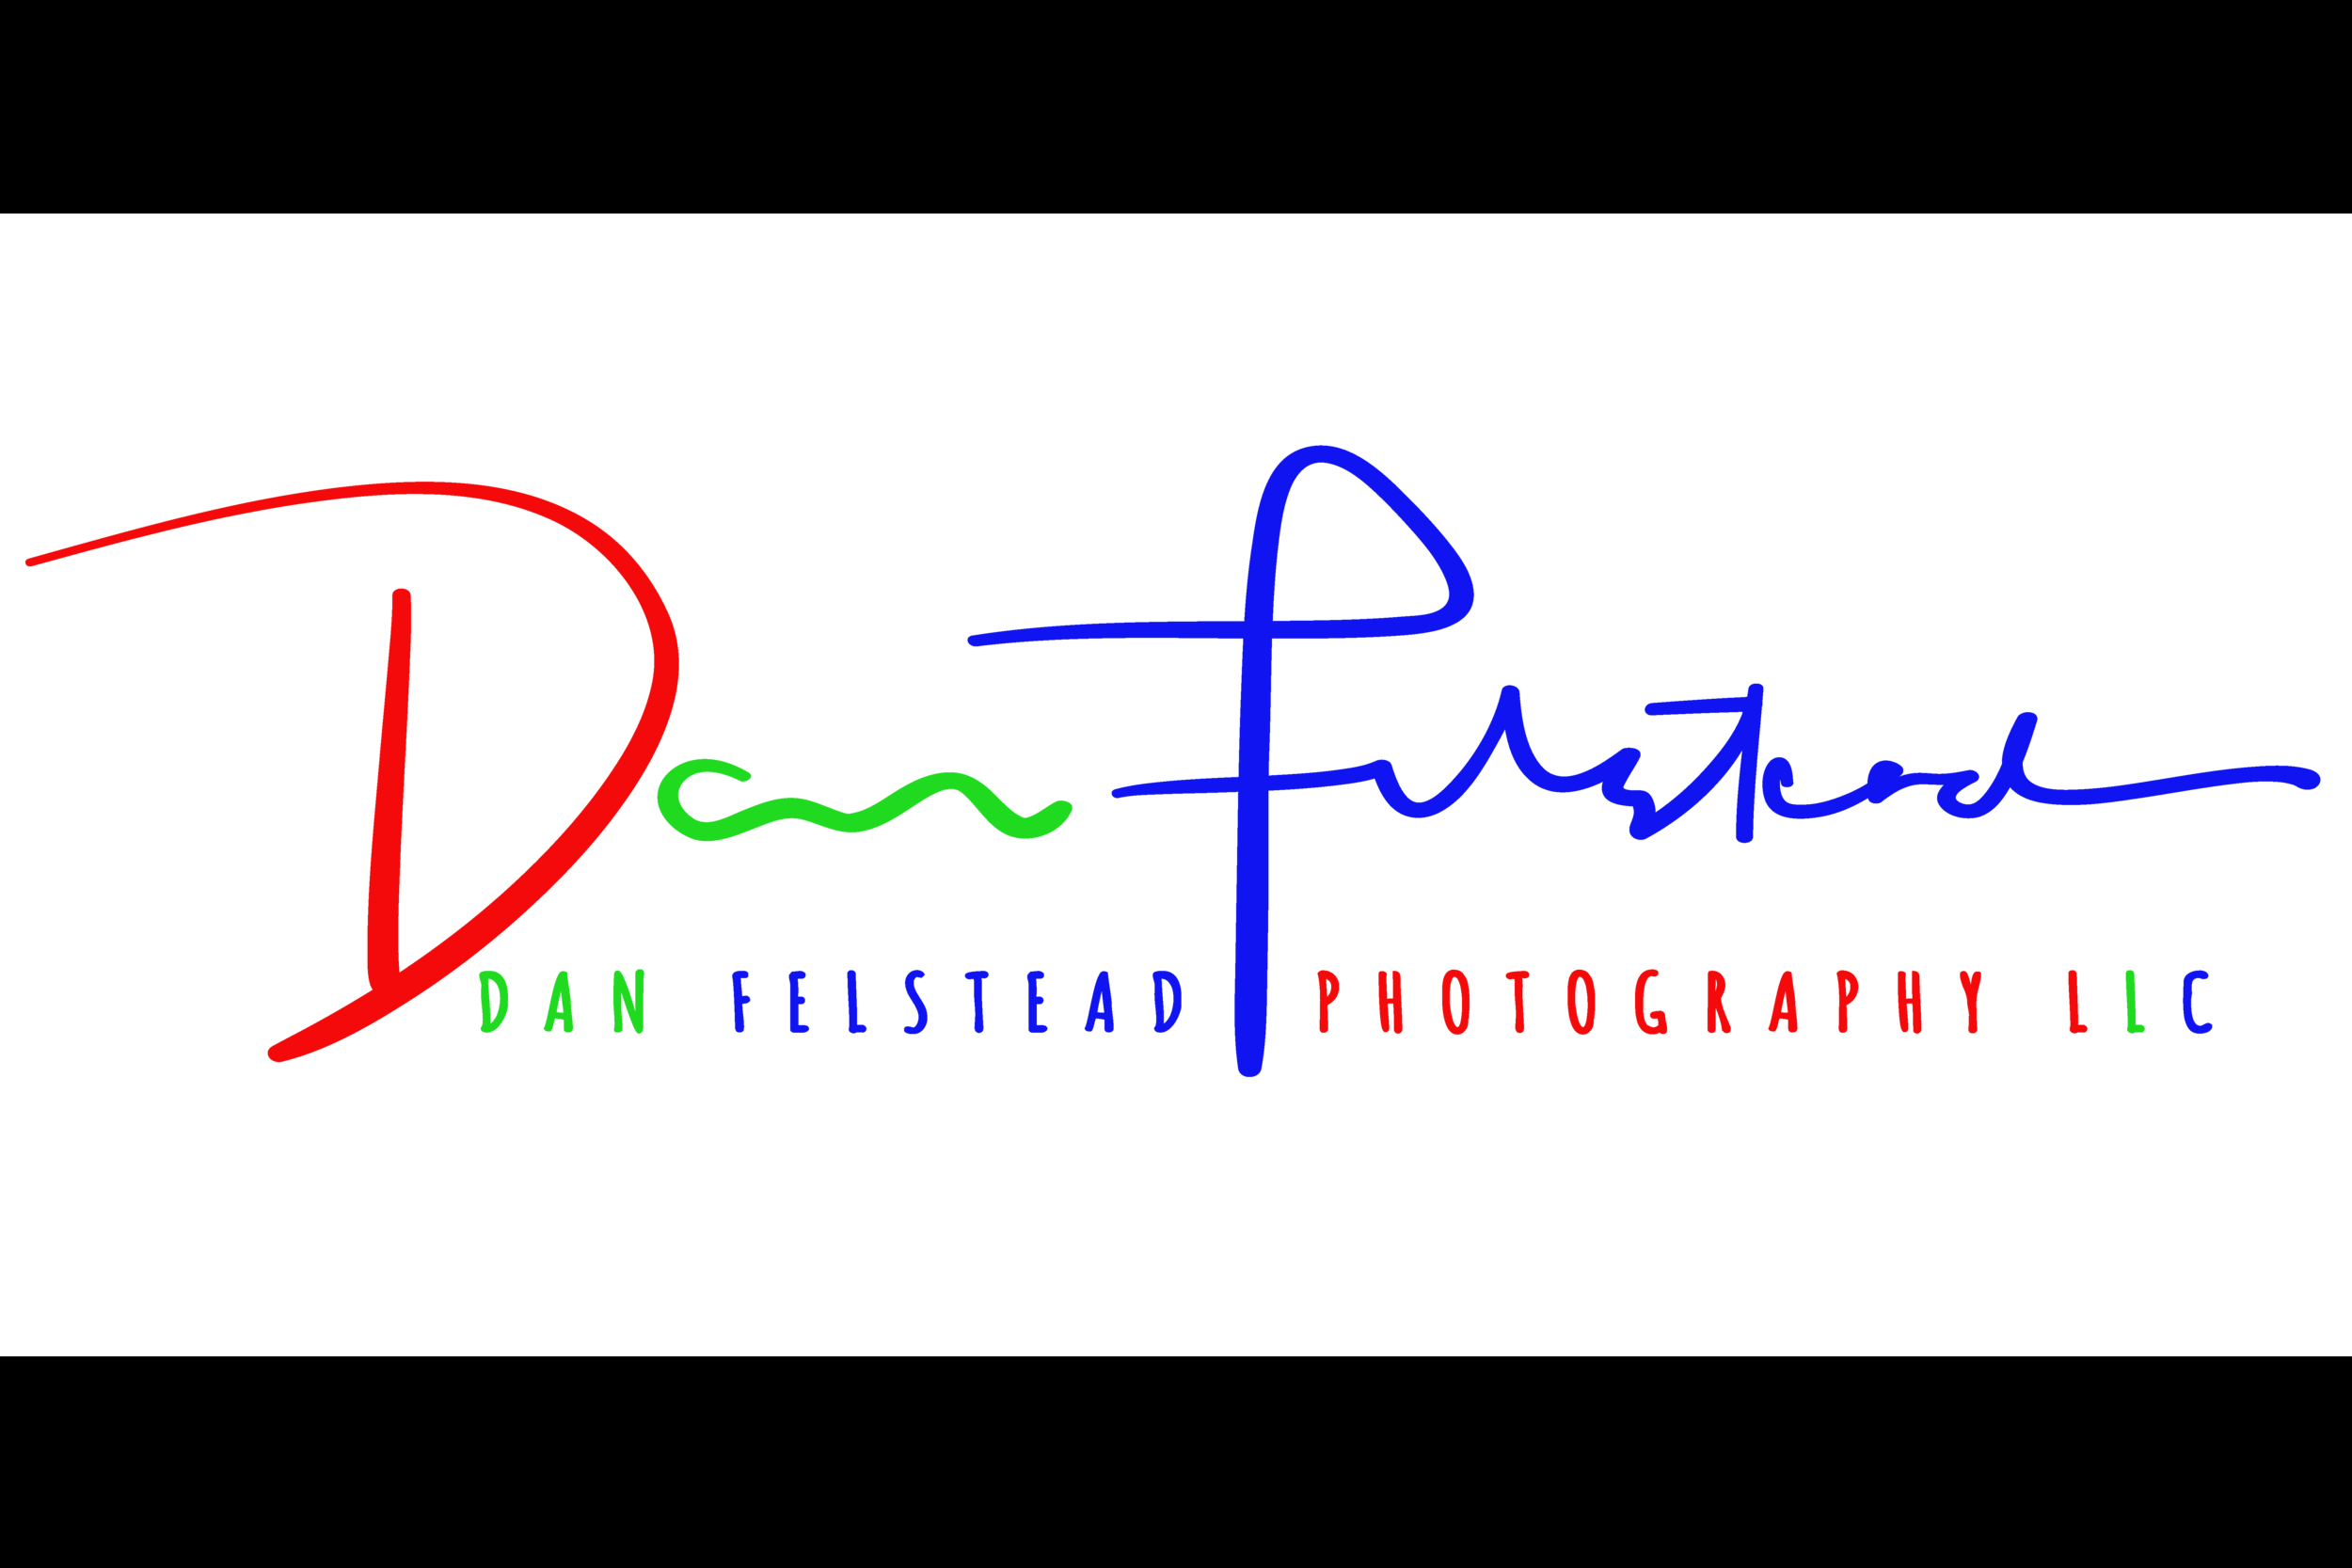 Dan Felstead Photography LLC